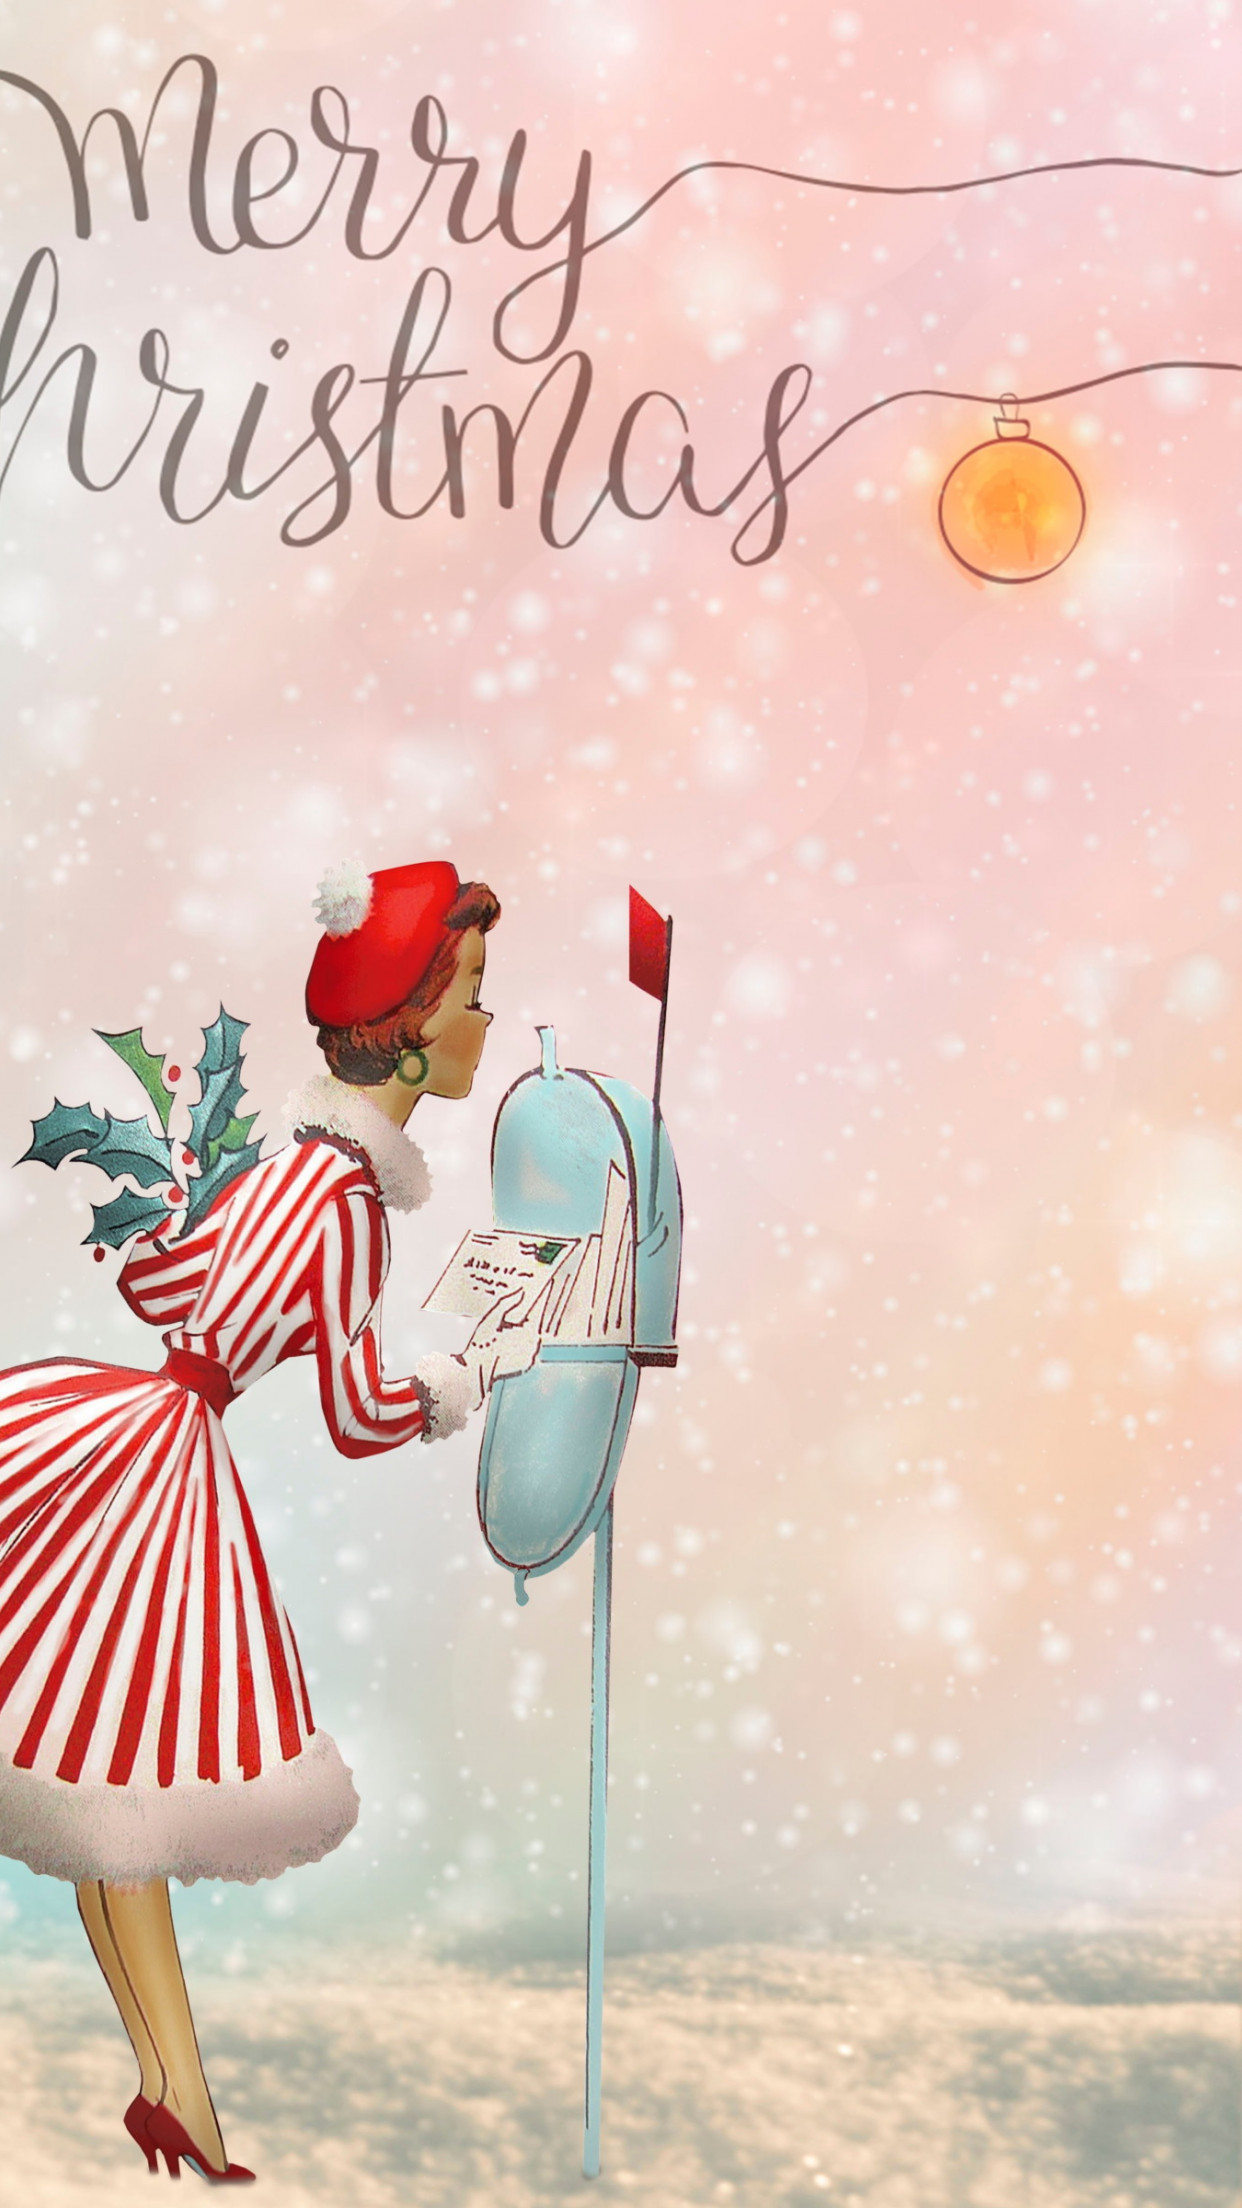 Merry Christmas 2020 Illustration wallpaper 1242x2208